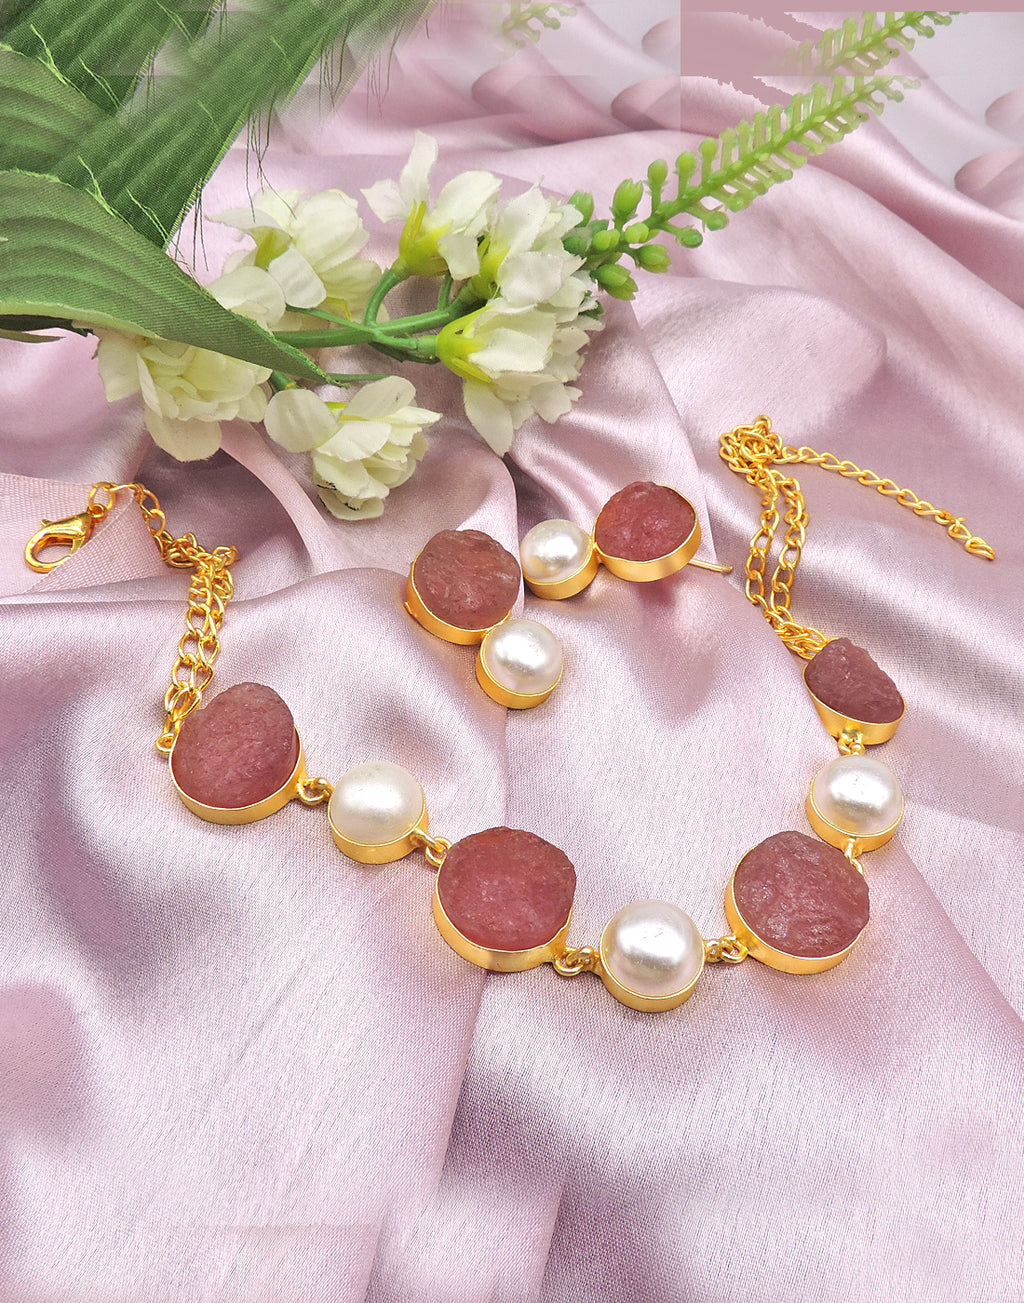 Pearl & Stone Earrings (Quartz) - Statement Earrings - Gold-Plated & Hypoallergenic Jewellery - Made in India - Dubai Jewellery - Dori